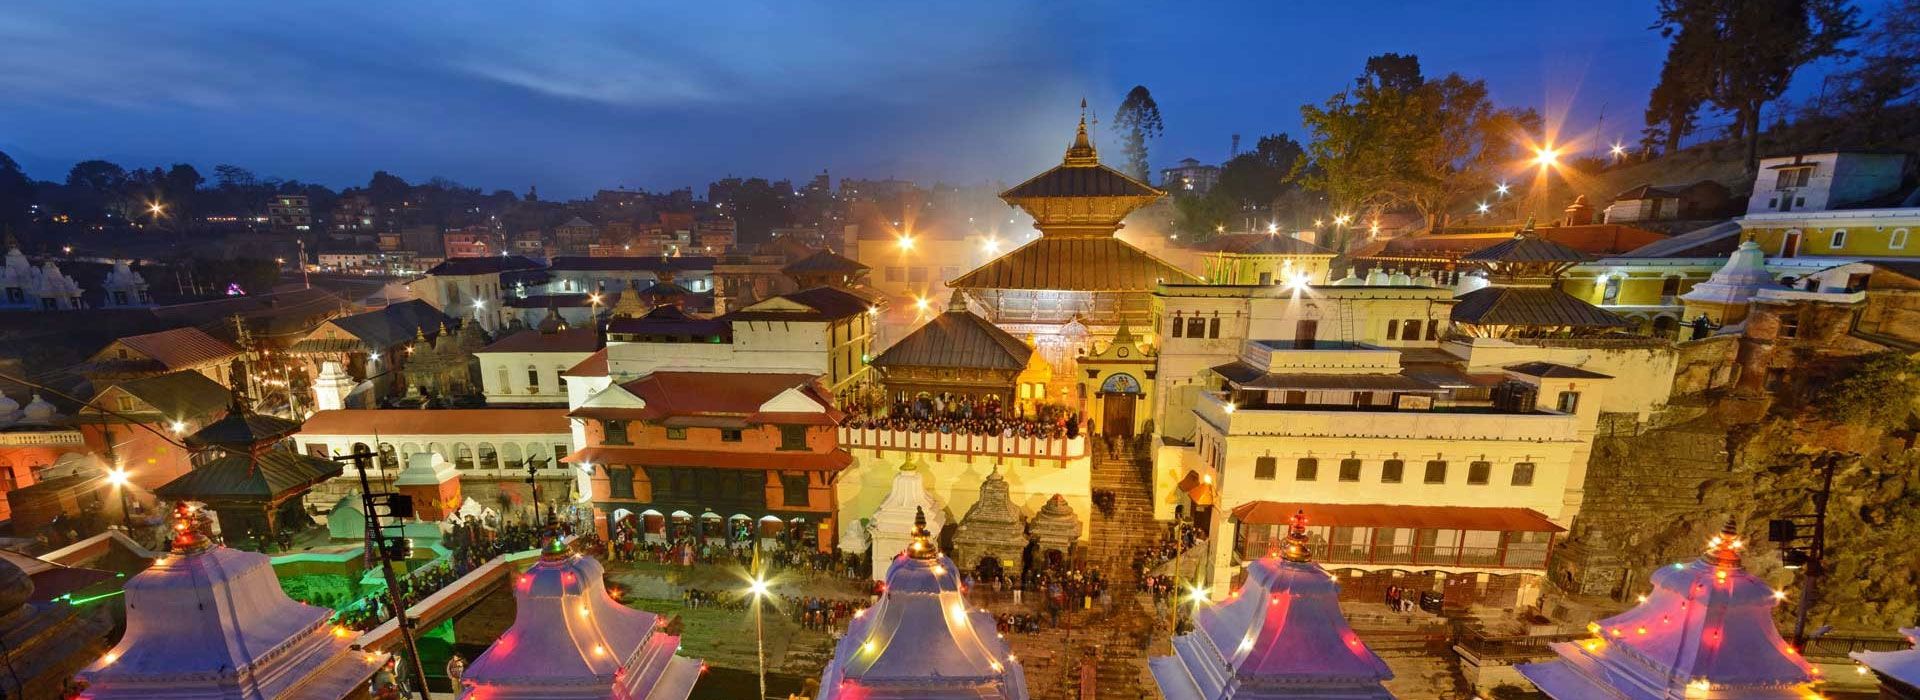 Pashupatinath Temple, an UNESCO world heritage site in Kathmandu